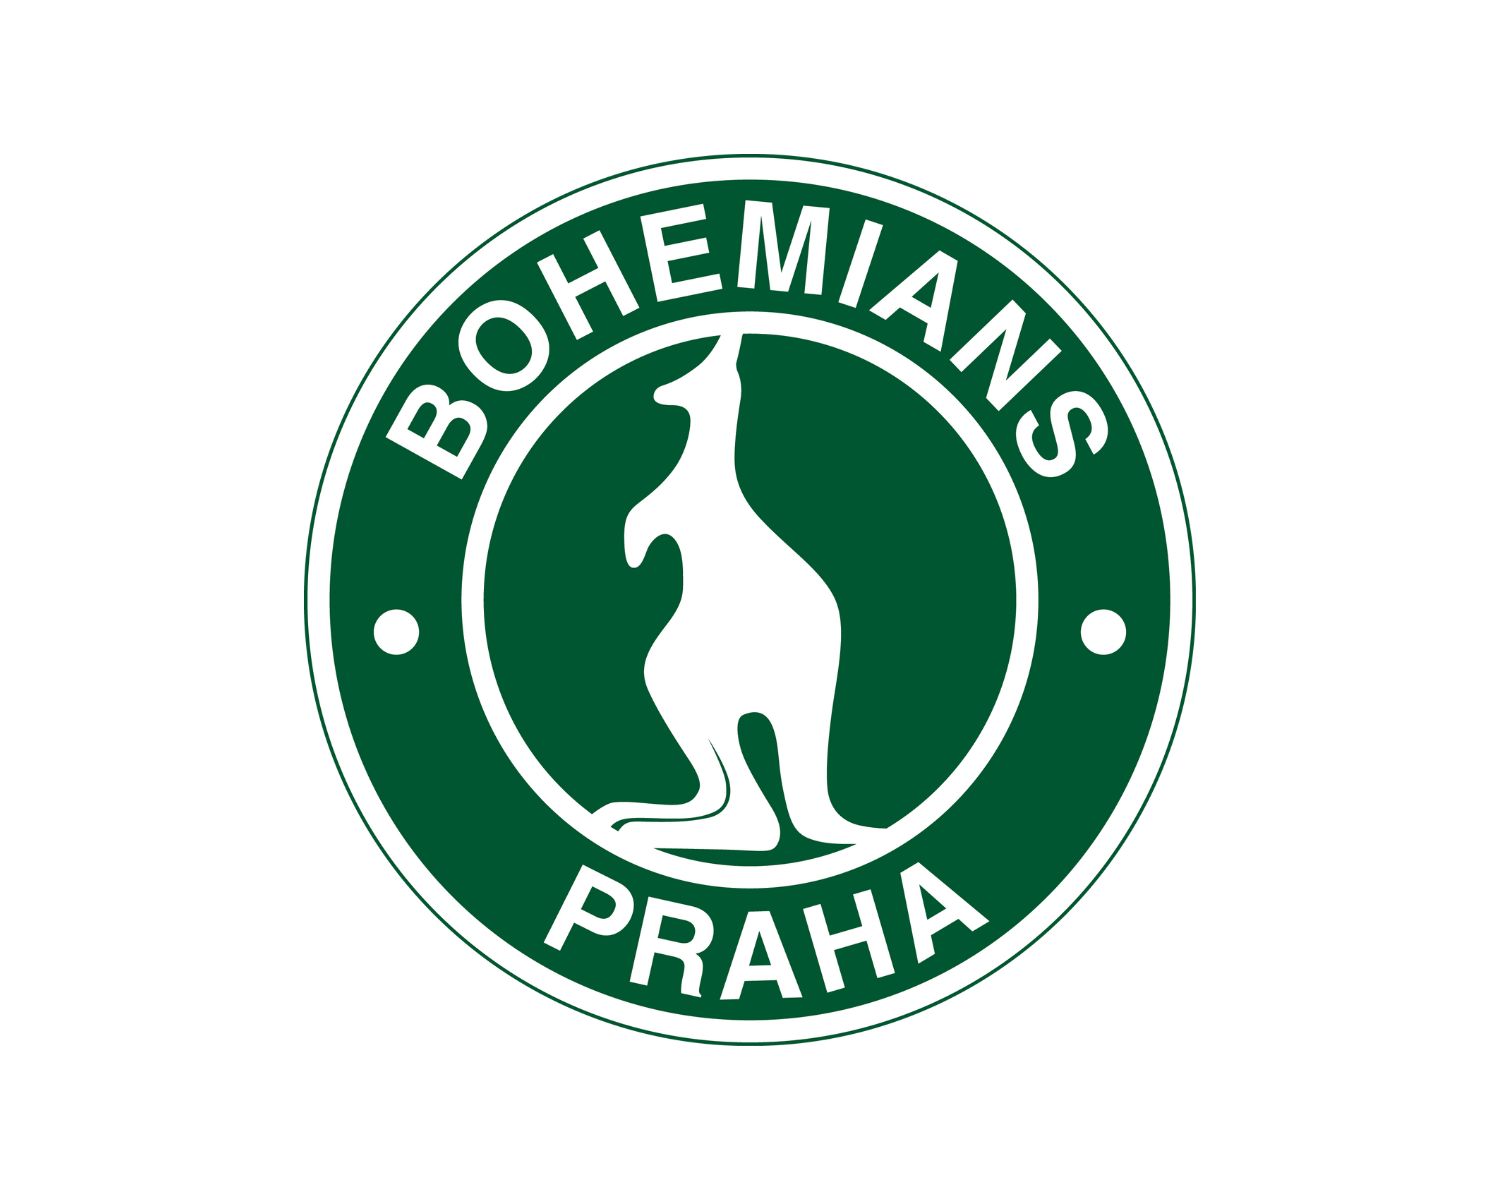 bohemians-praha-1905-17-football-club-facts